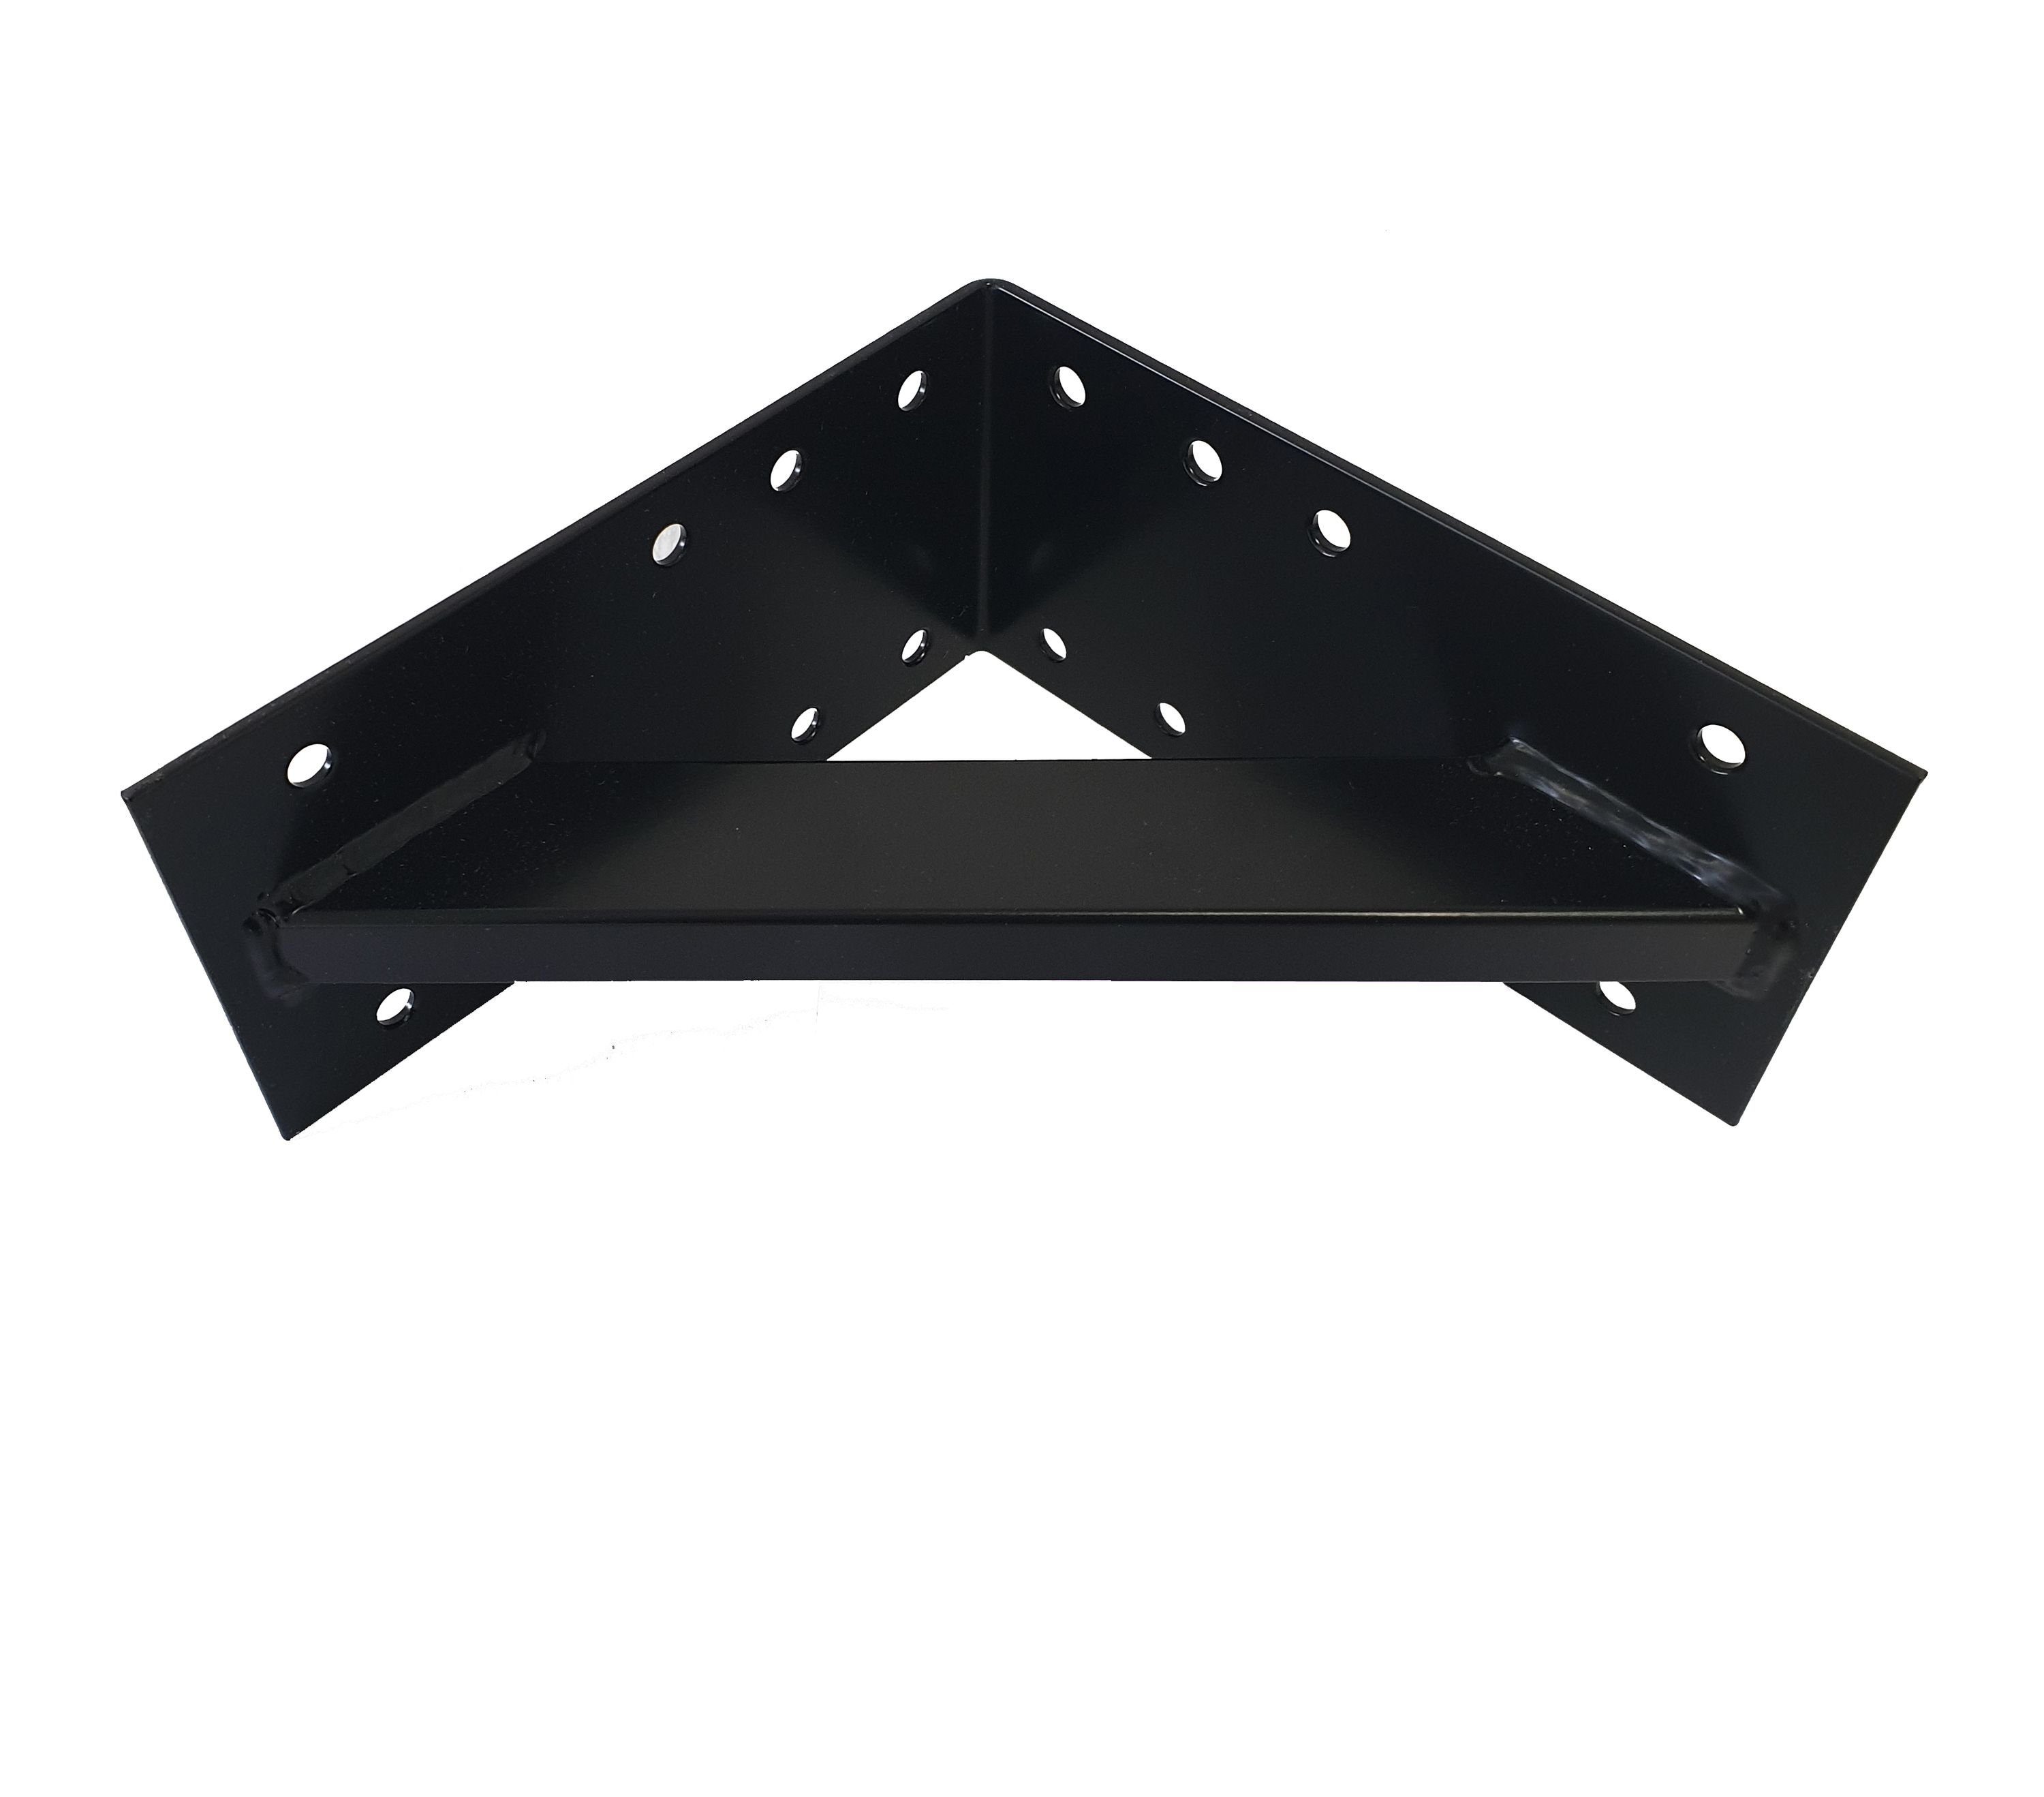 Holzverbinder 25x25x10 extra Winkel verstärkt dynamic24 Holzkonstruktionsbeschlag, stark Stahl schwarz